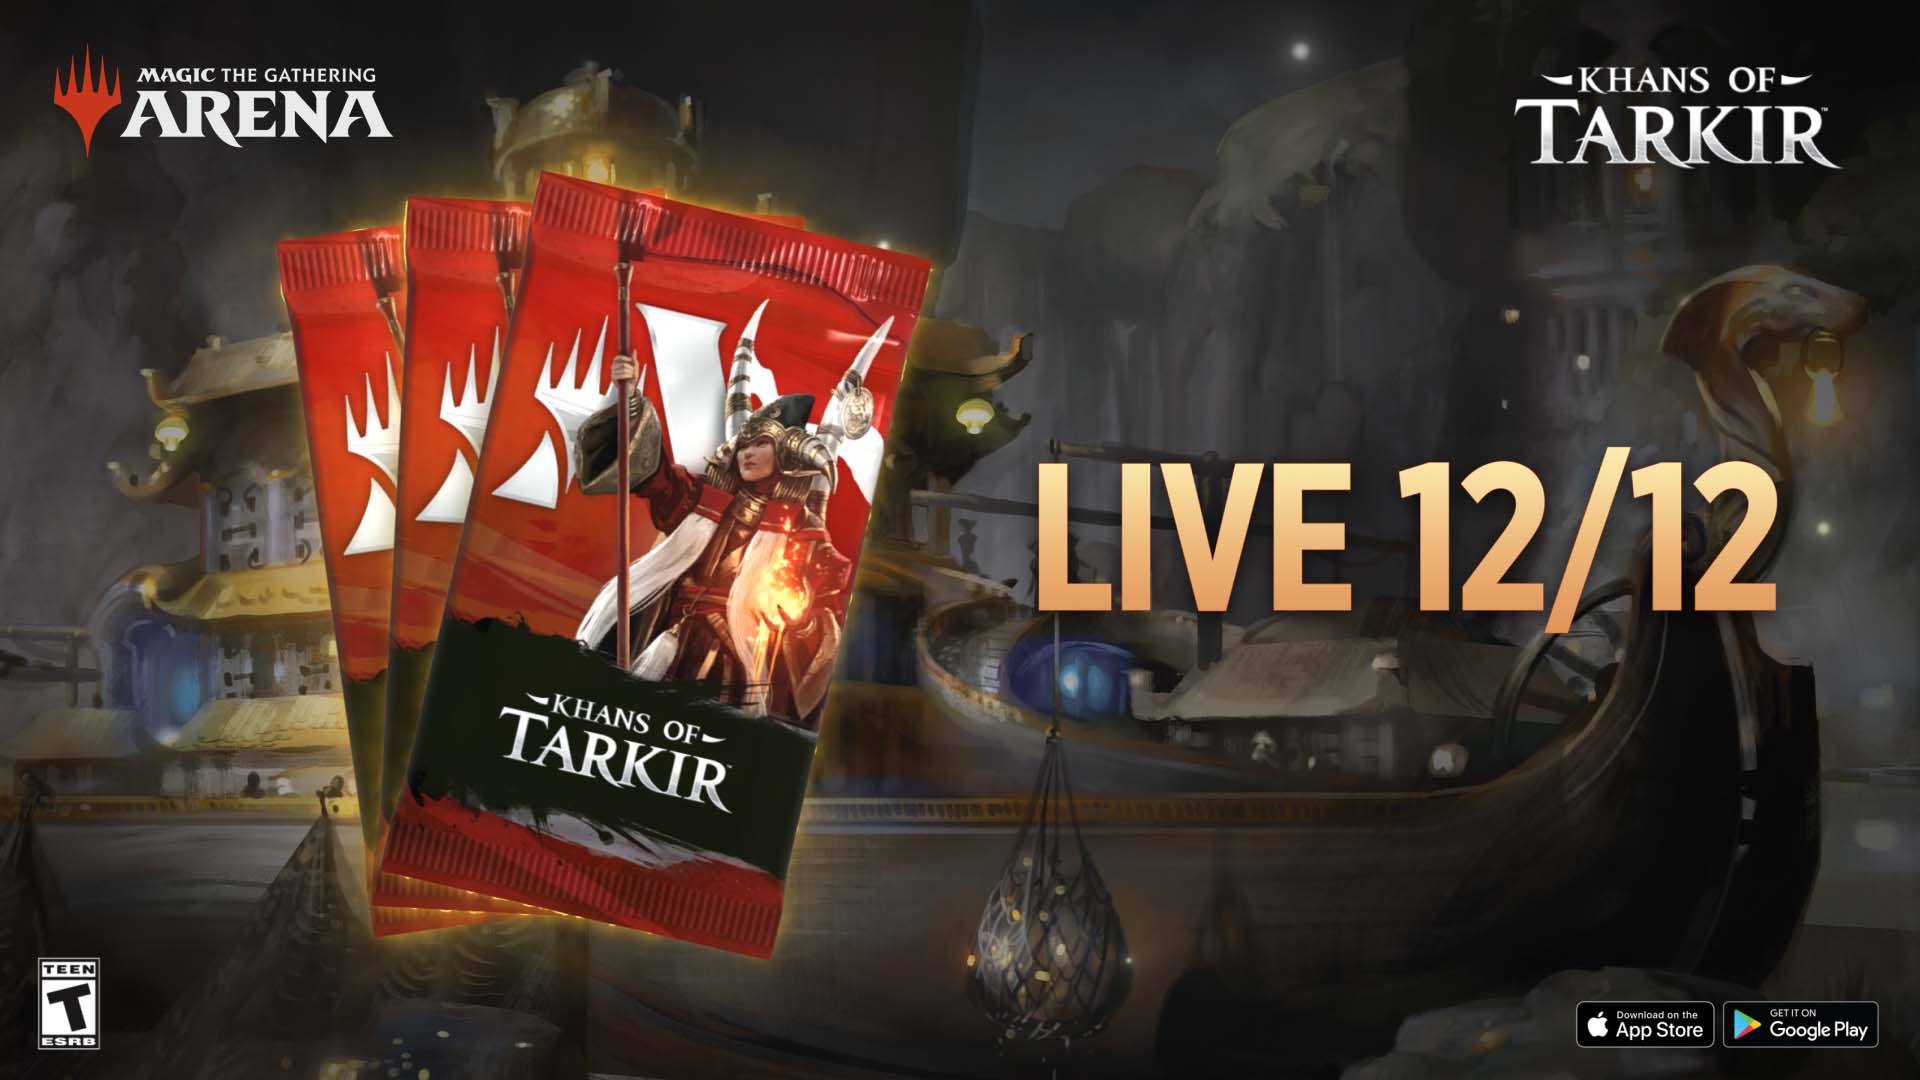 Three Khans of Tarkir packs, set release on 12/12